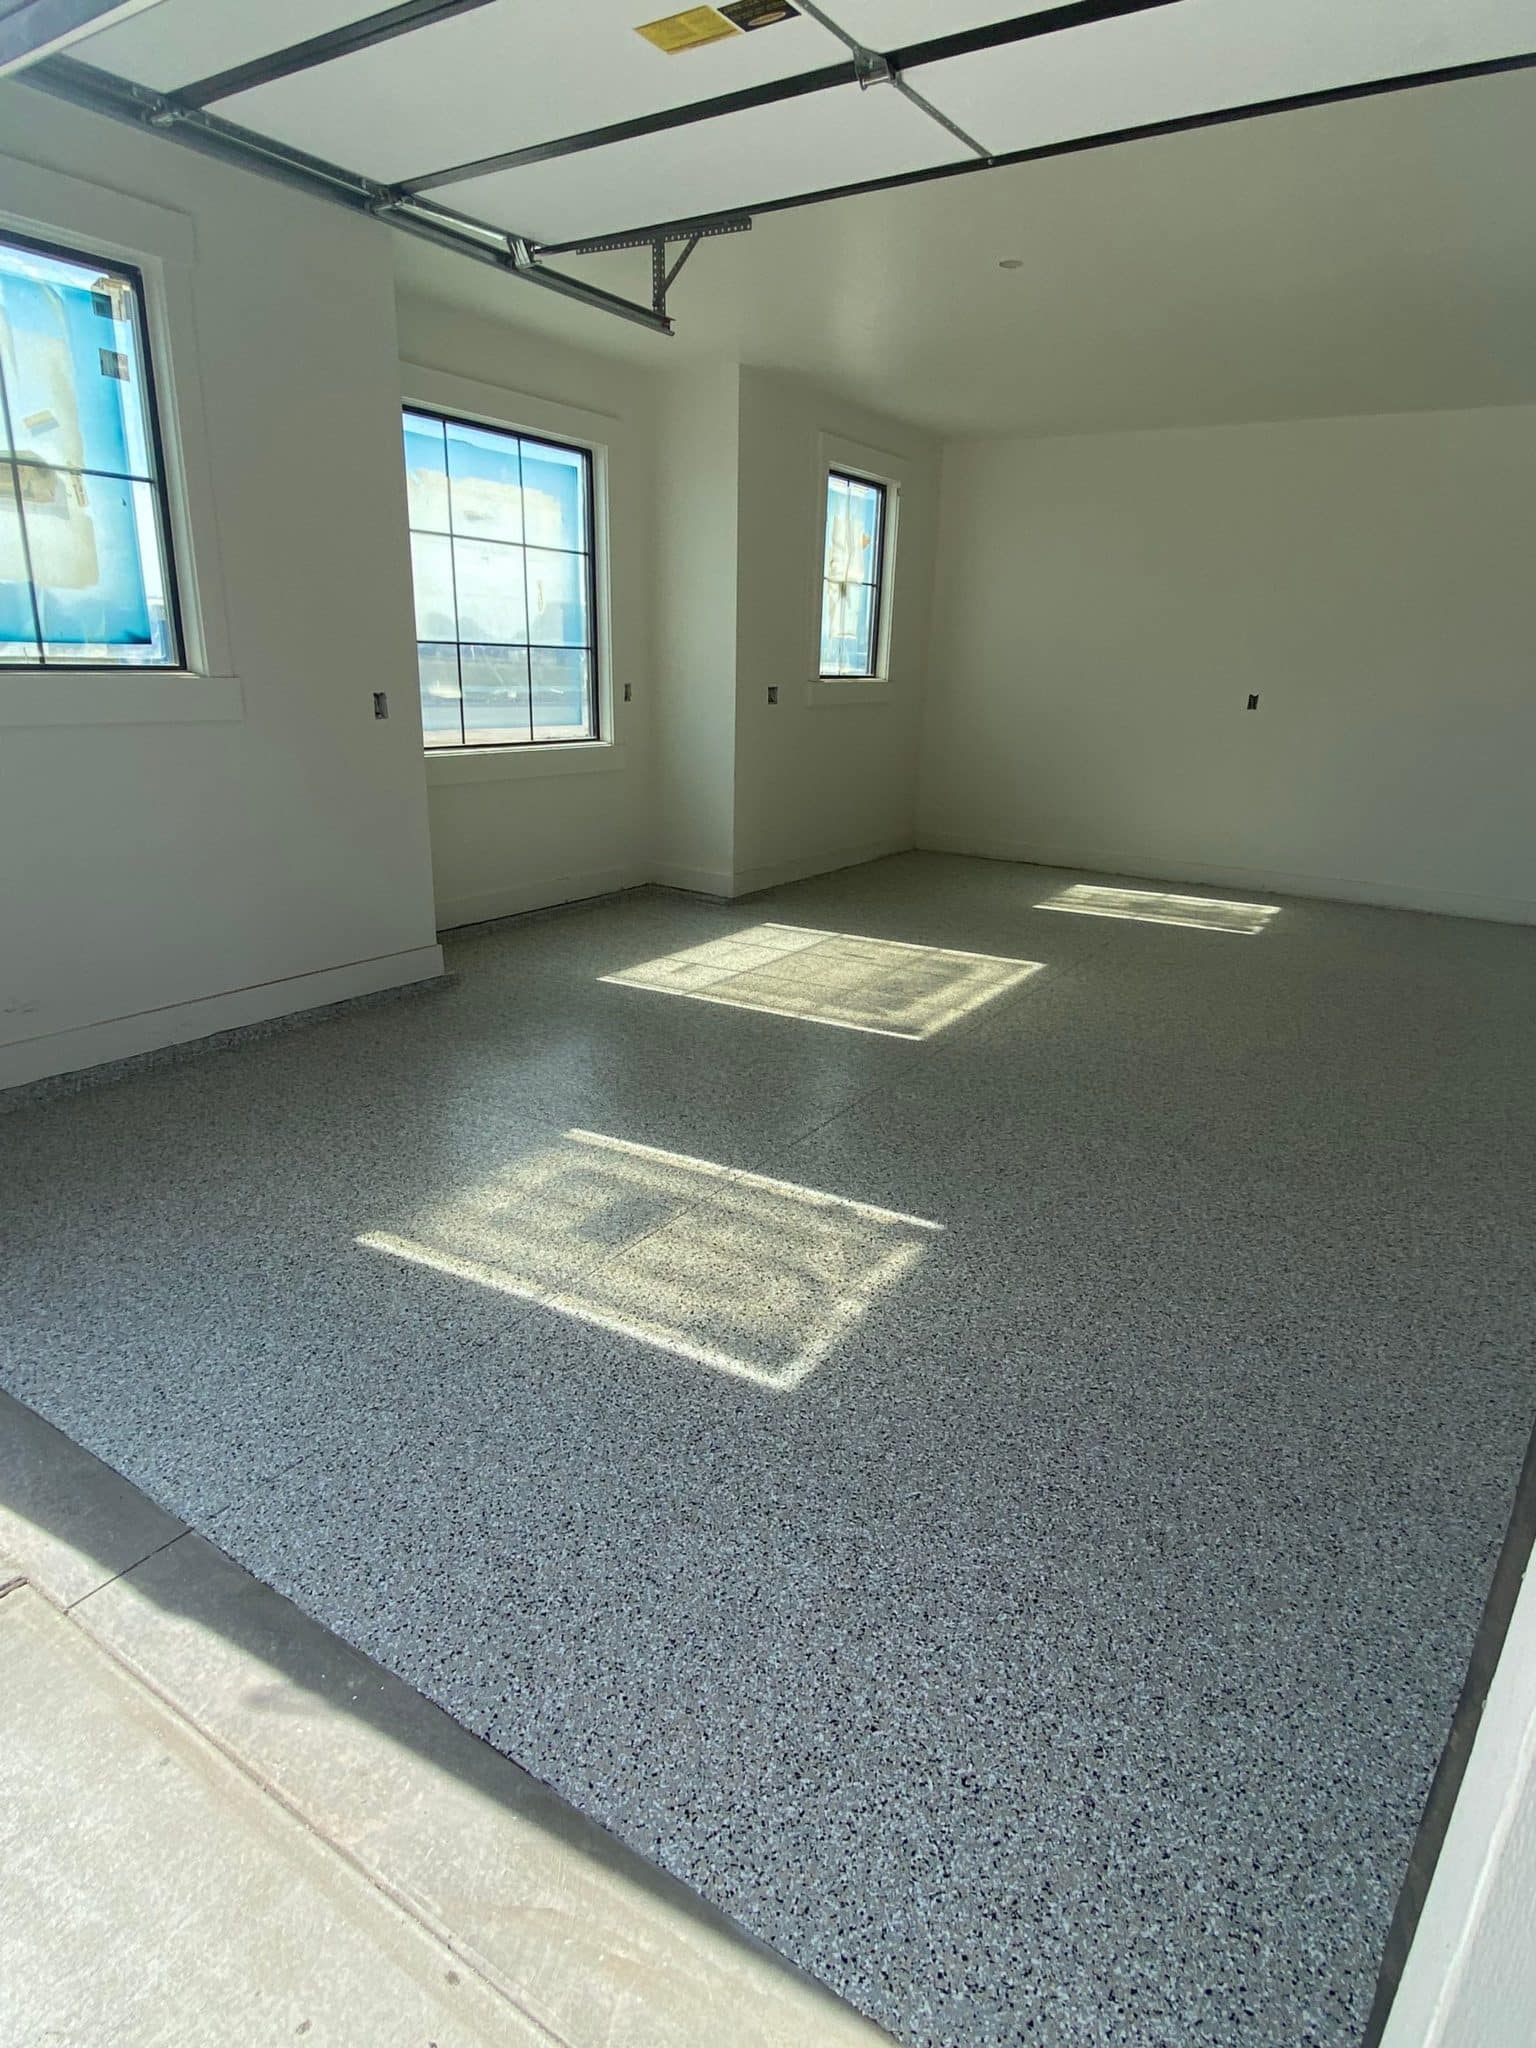 2022 Parade of Homes - Epoxy Garage Floor Coating in Plain City Utah